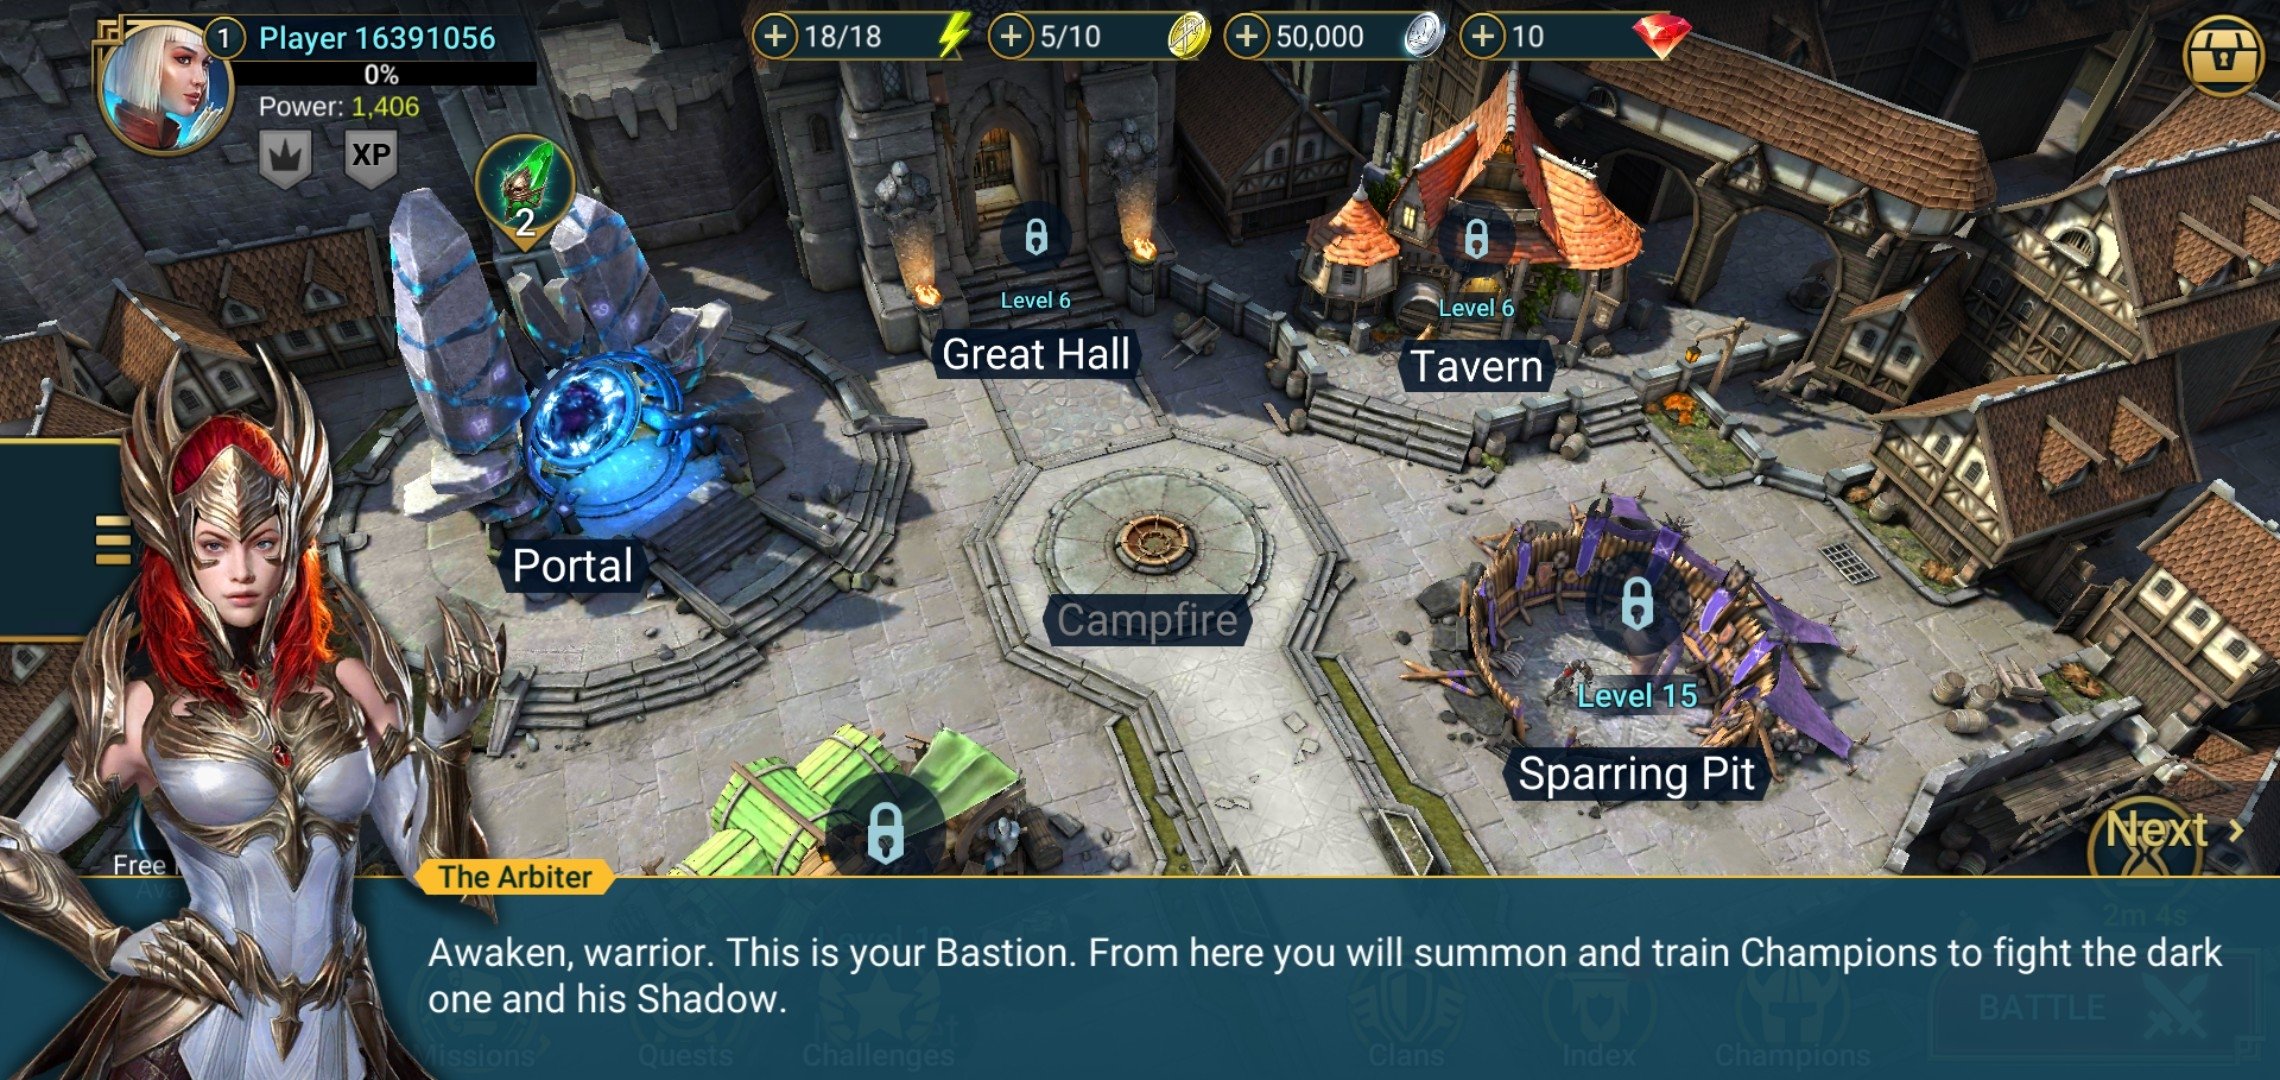 raid shadow legends 6 star guide